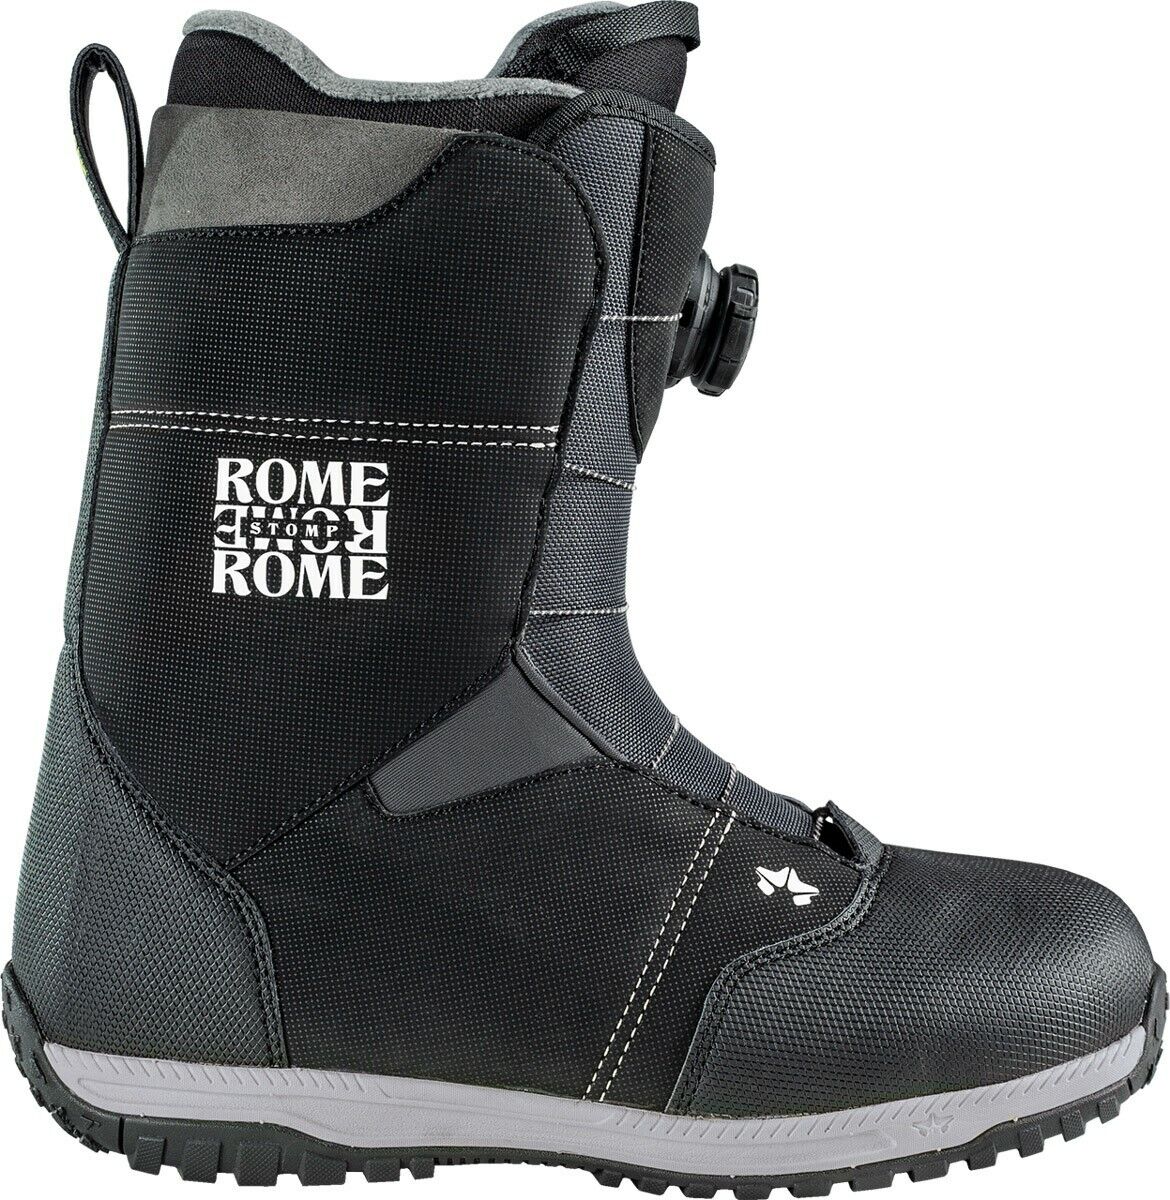 Rome Popularity Stomp Direct store Boa Snowboard Boots Men's Black Size 2021 New 11